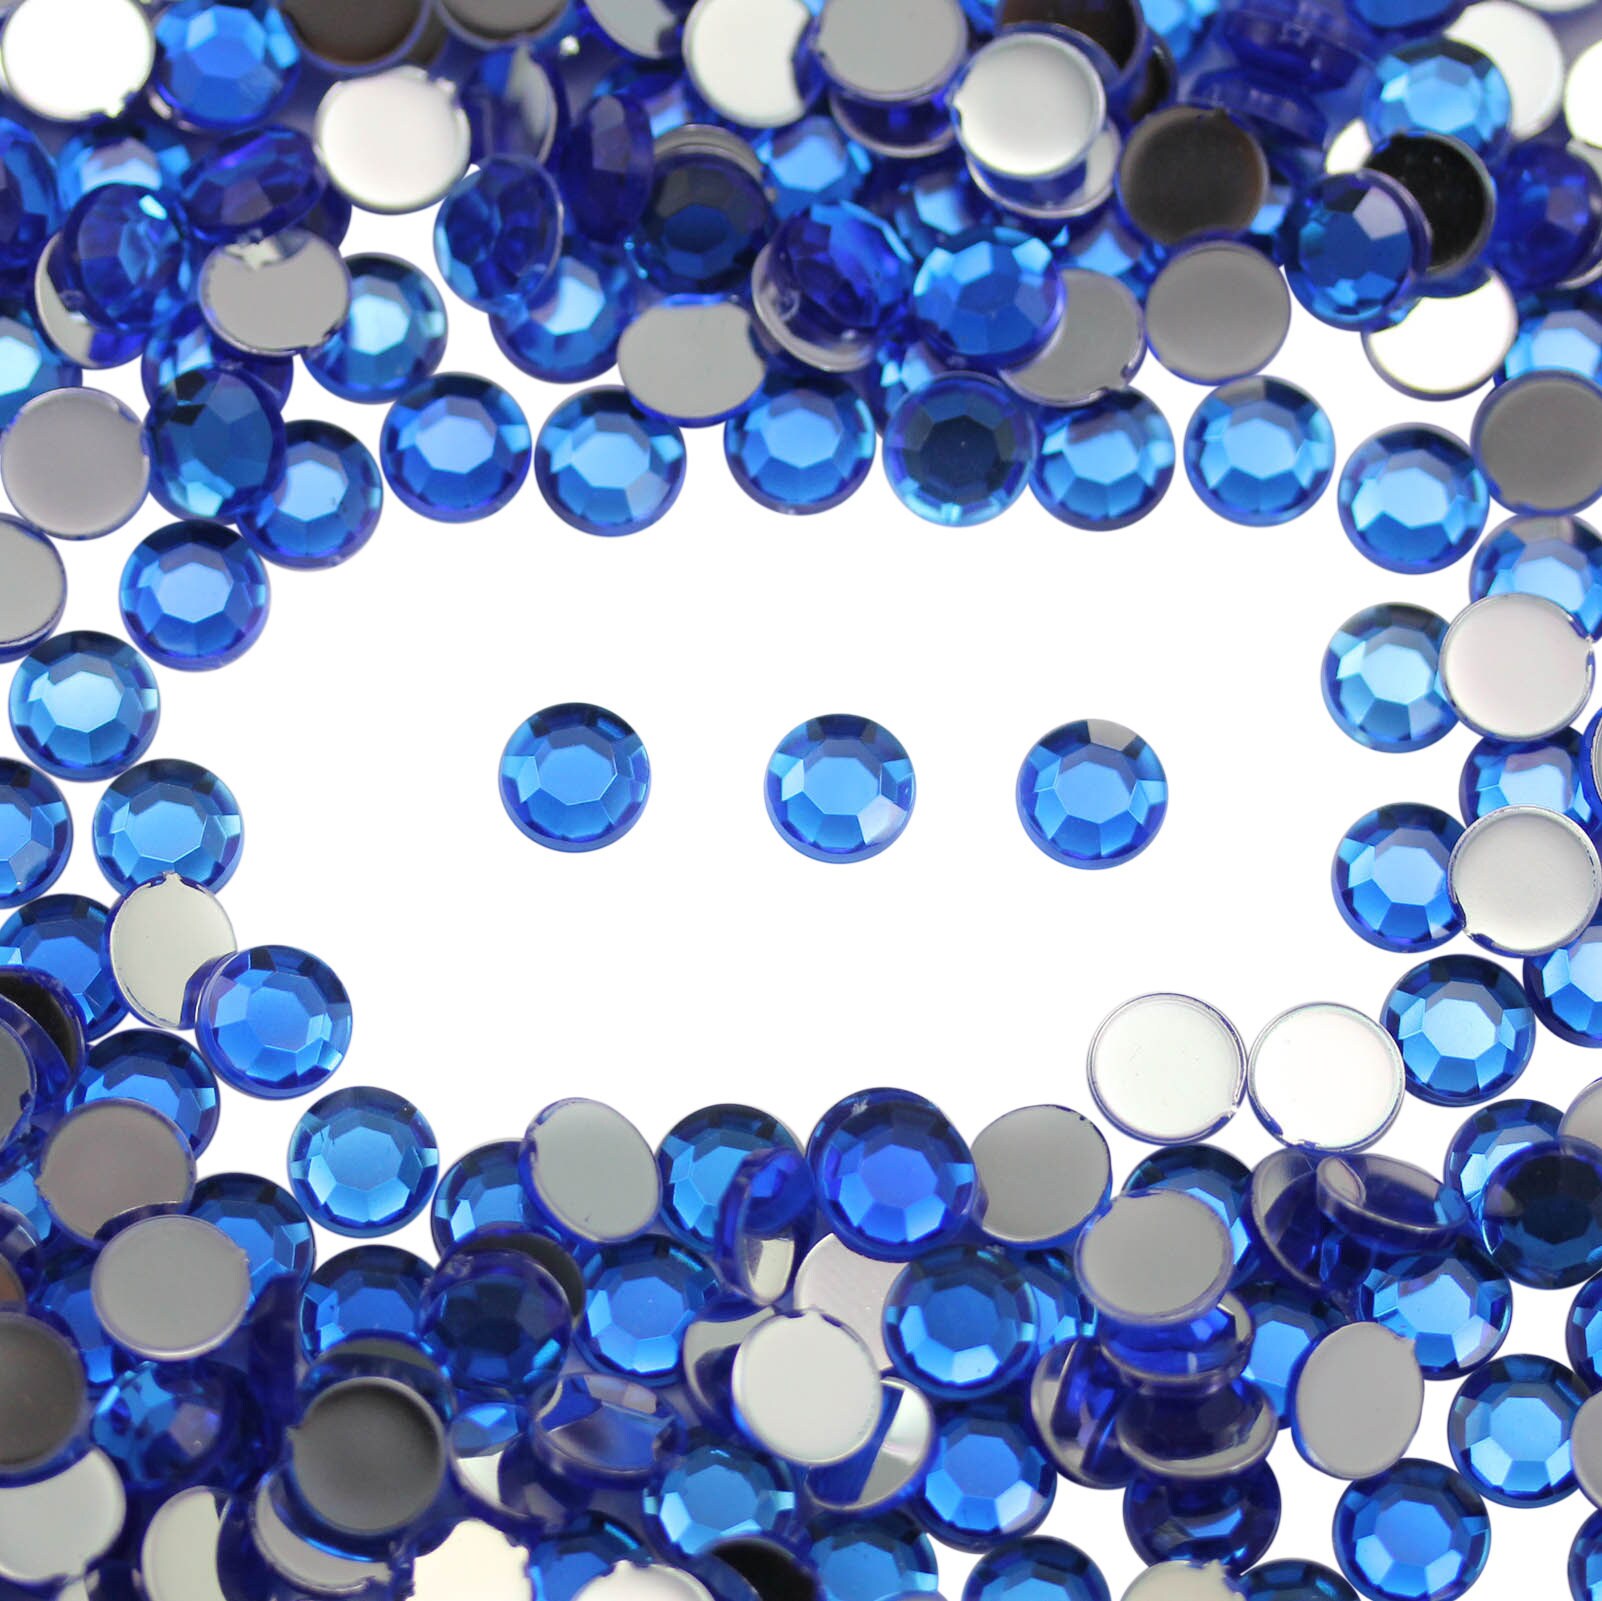 5mm SS21 Blue Self Adhesive Acrylic Rhinestones Plastic Face Gems Stick on Body